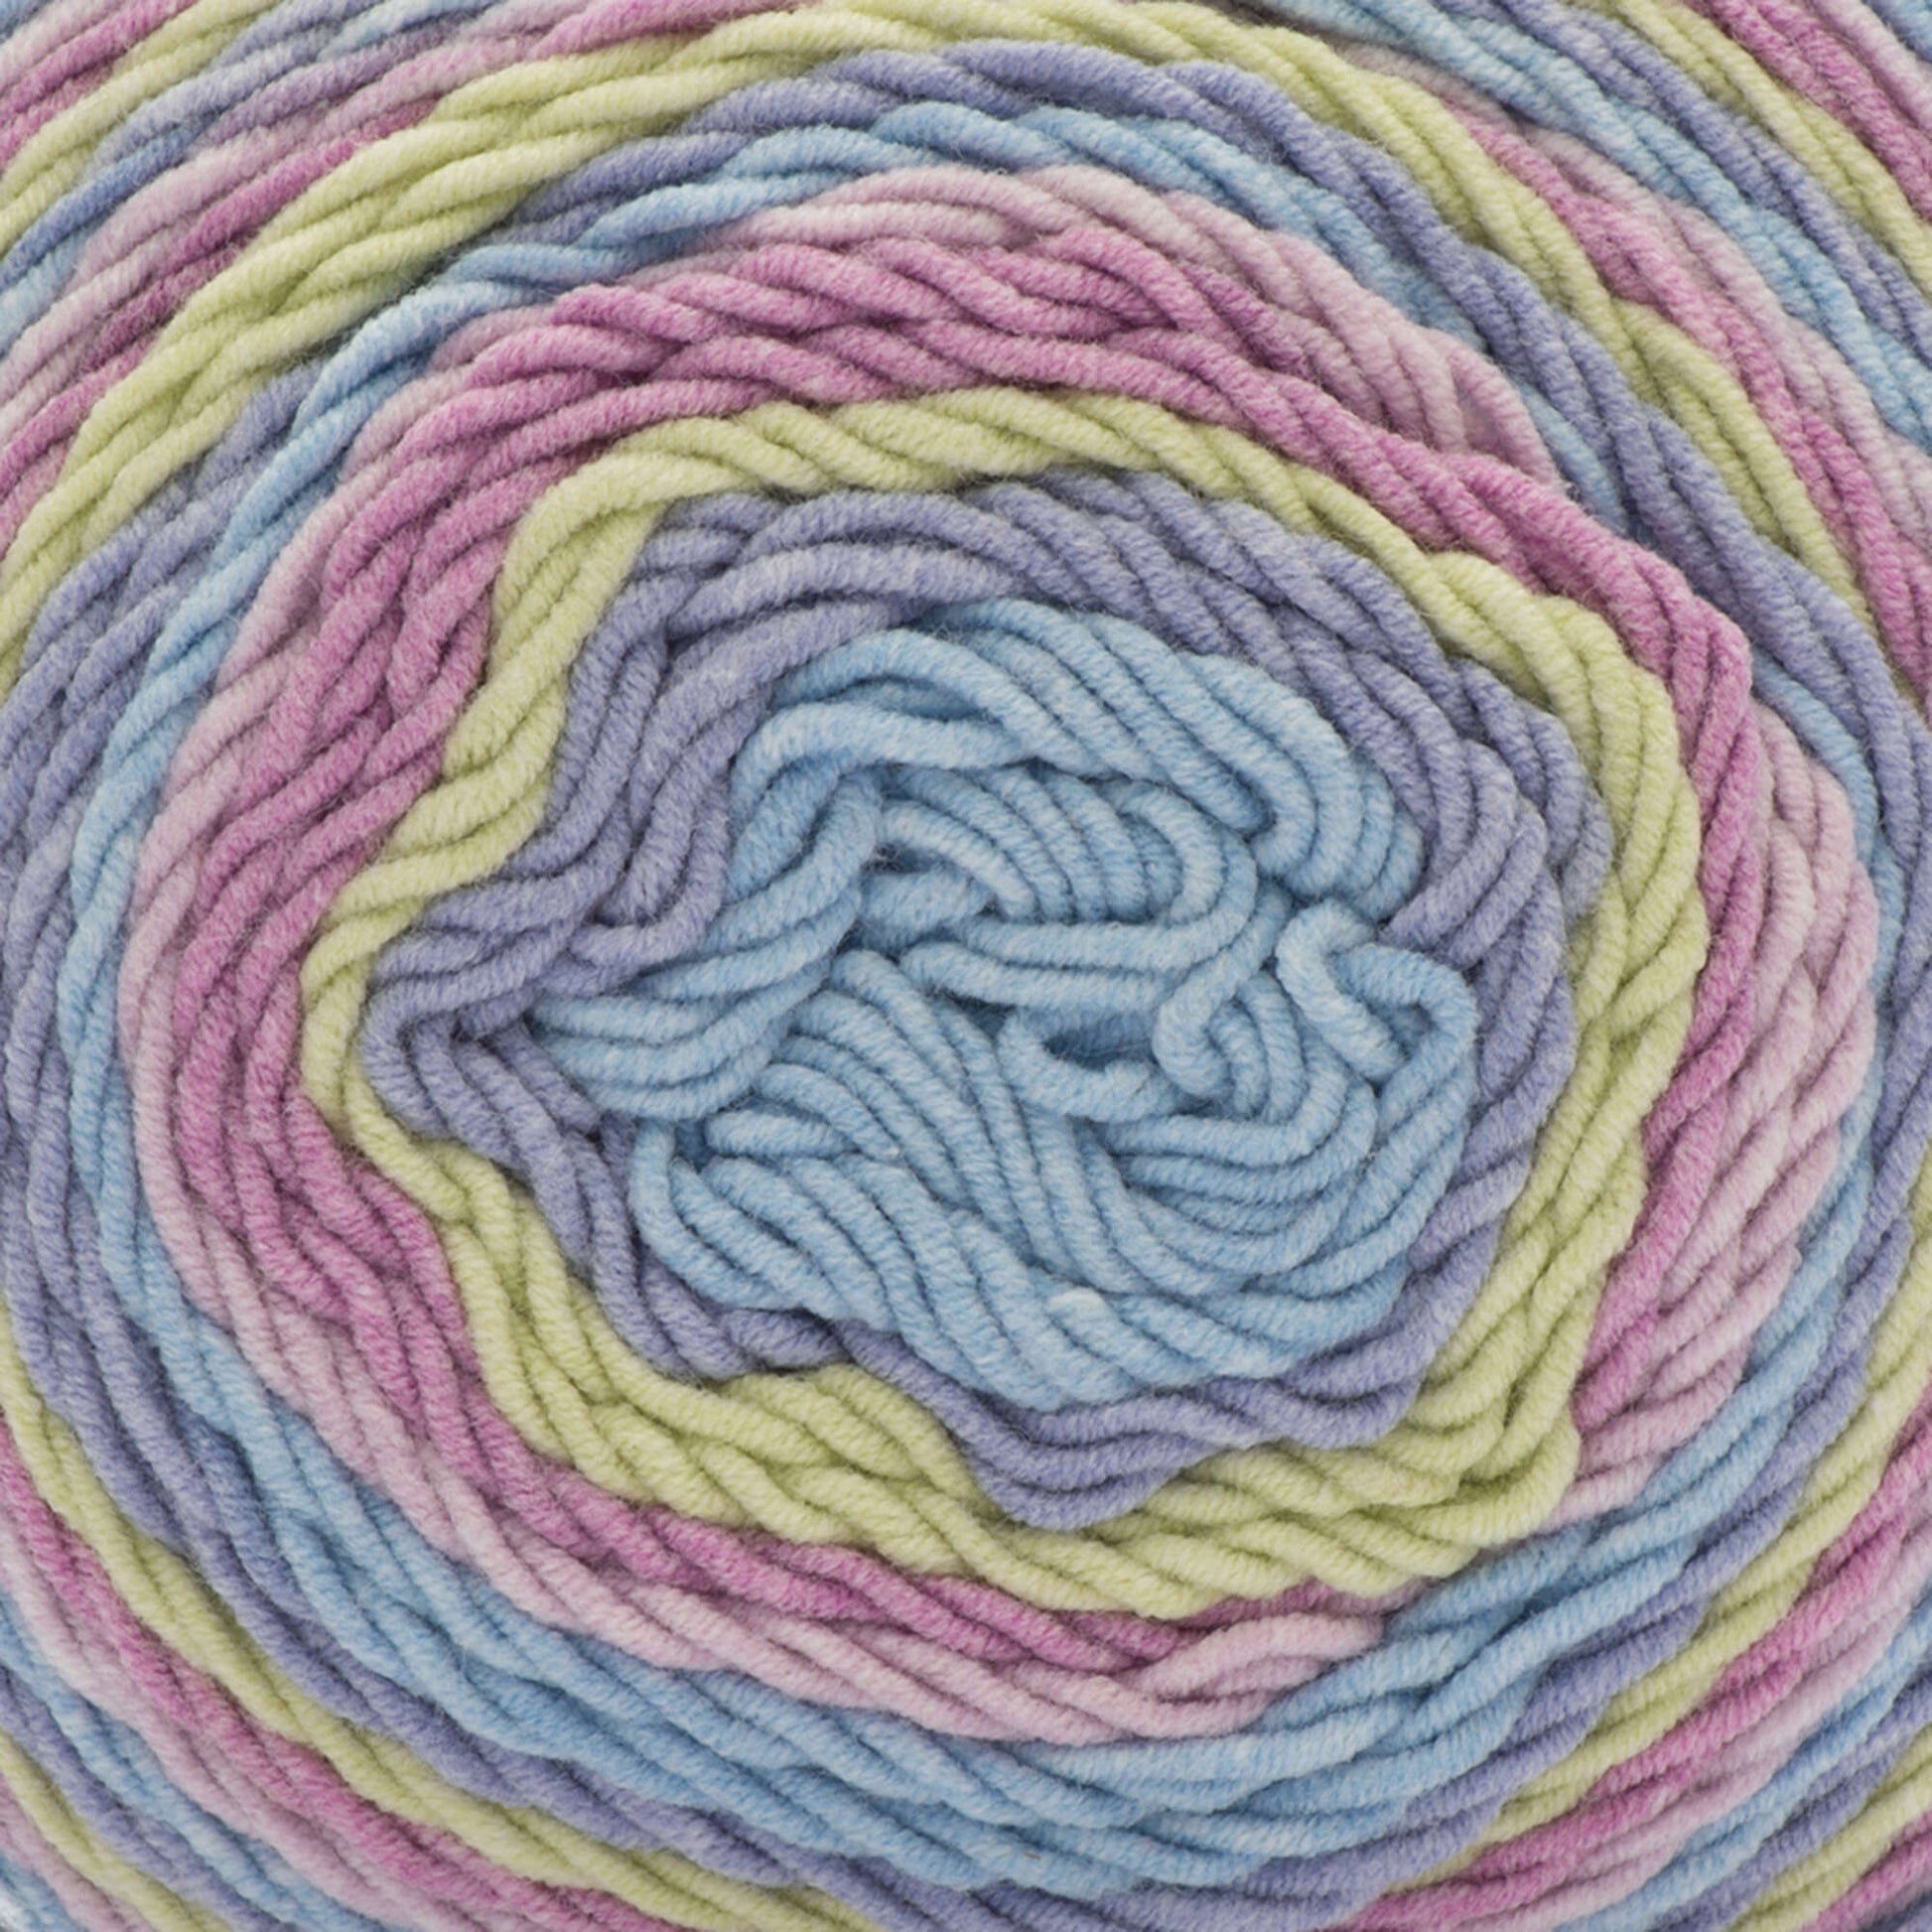 Caron Cotton Cakes Yarn (250g/8.8oz) Sunset Dreams